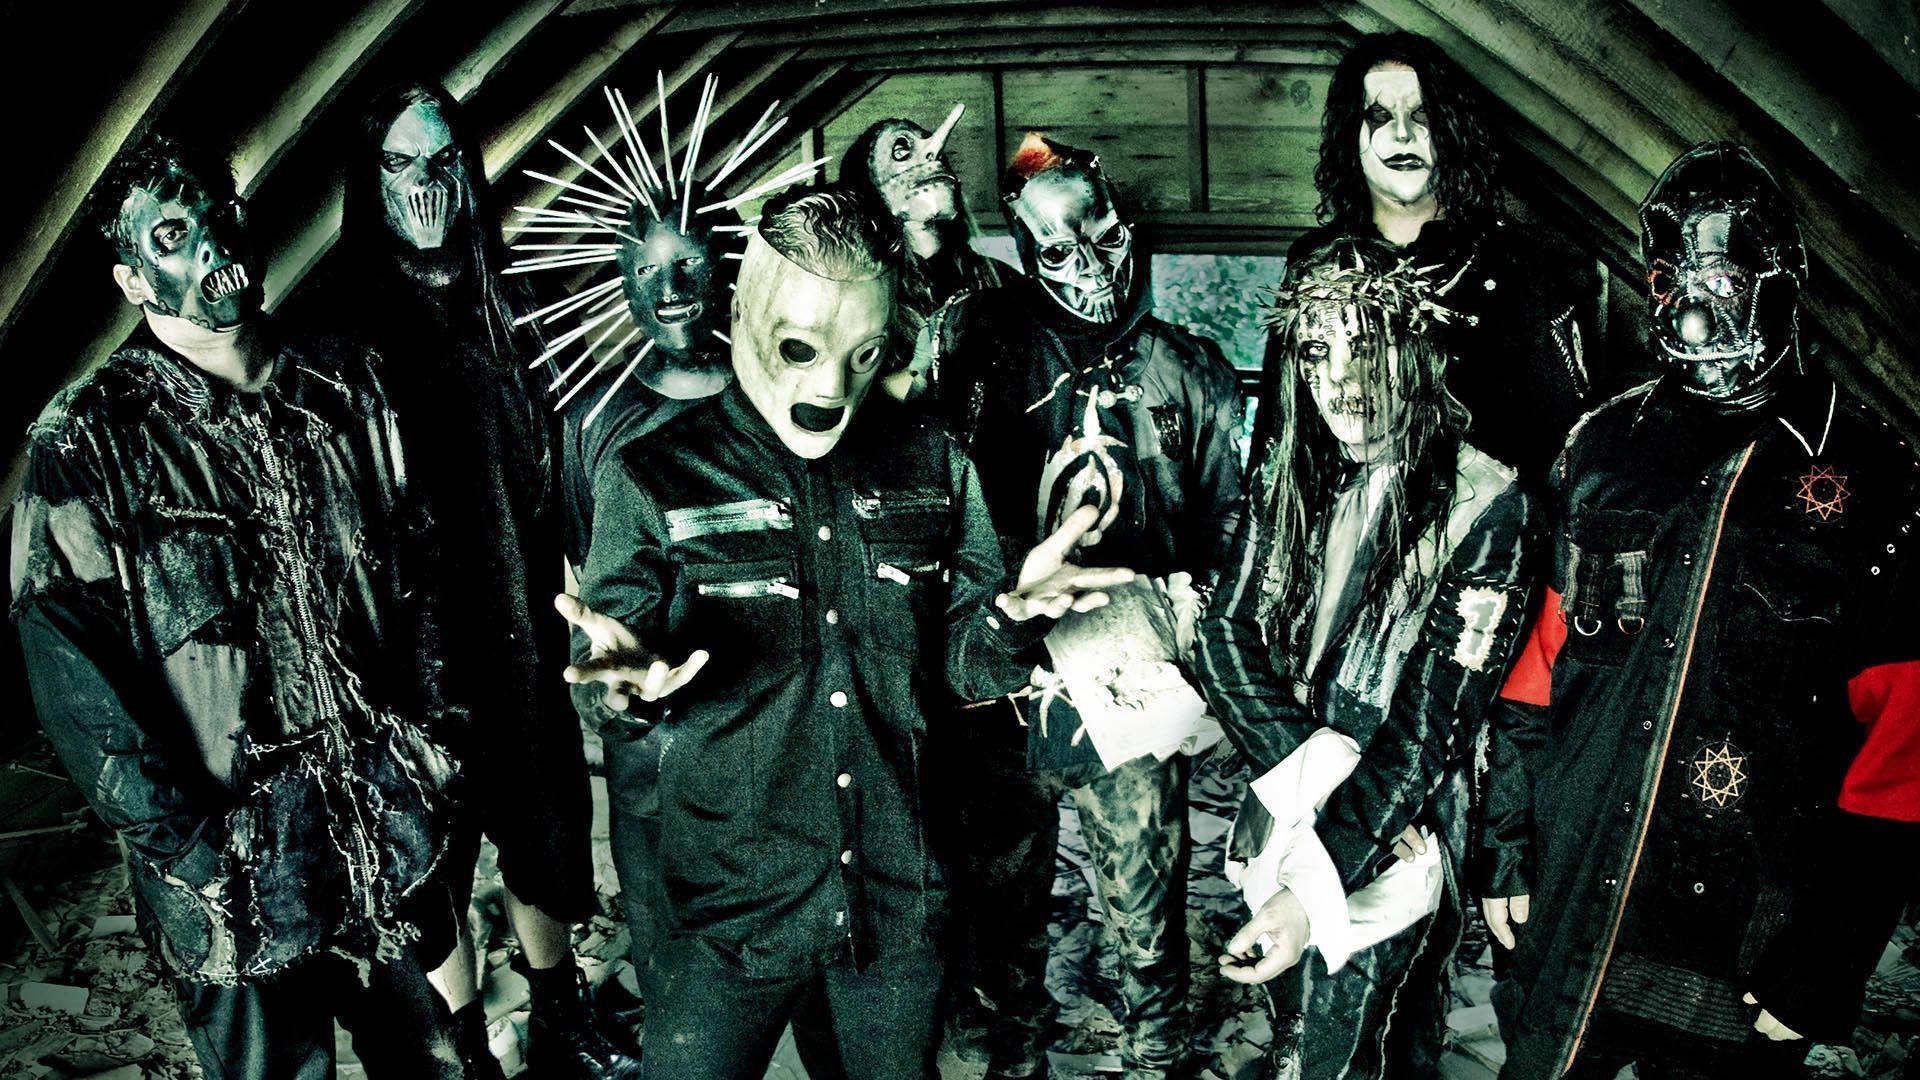 Slipknot Members At Creepy Attic Wallpaper